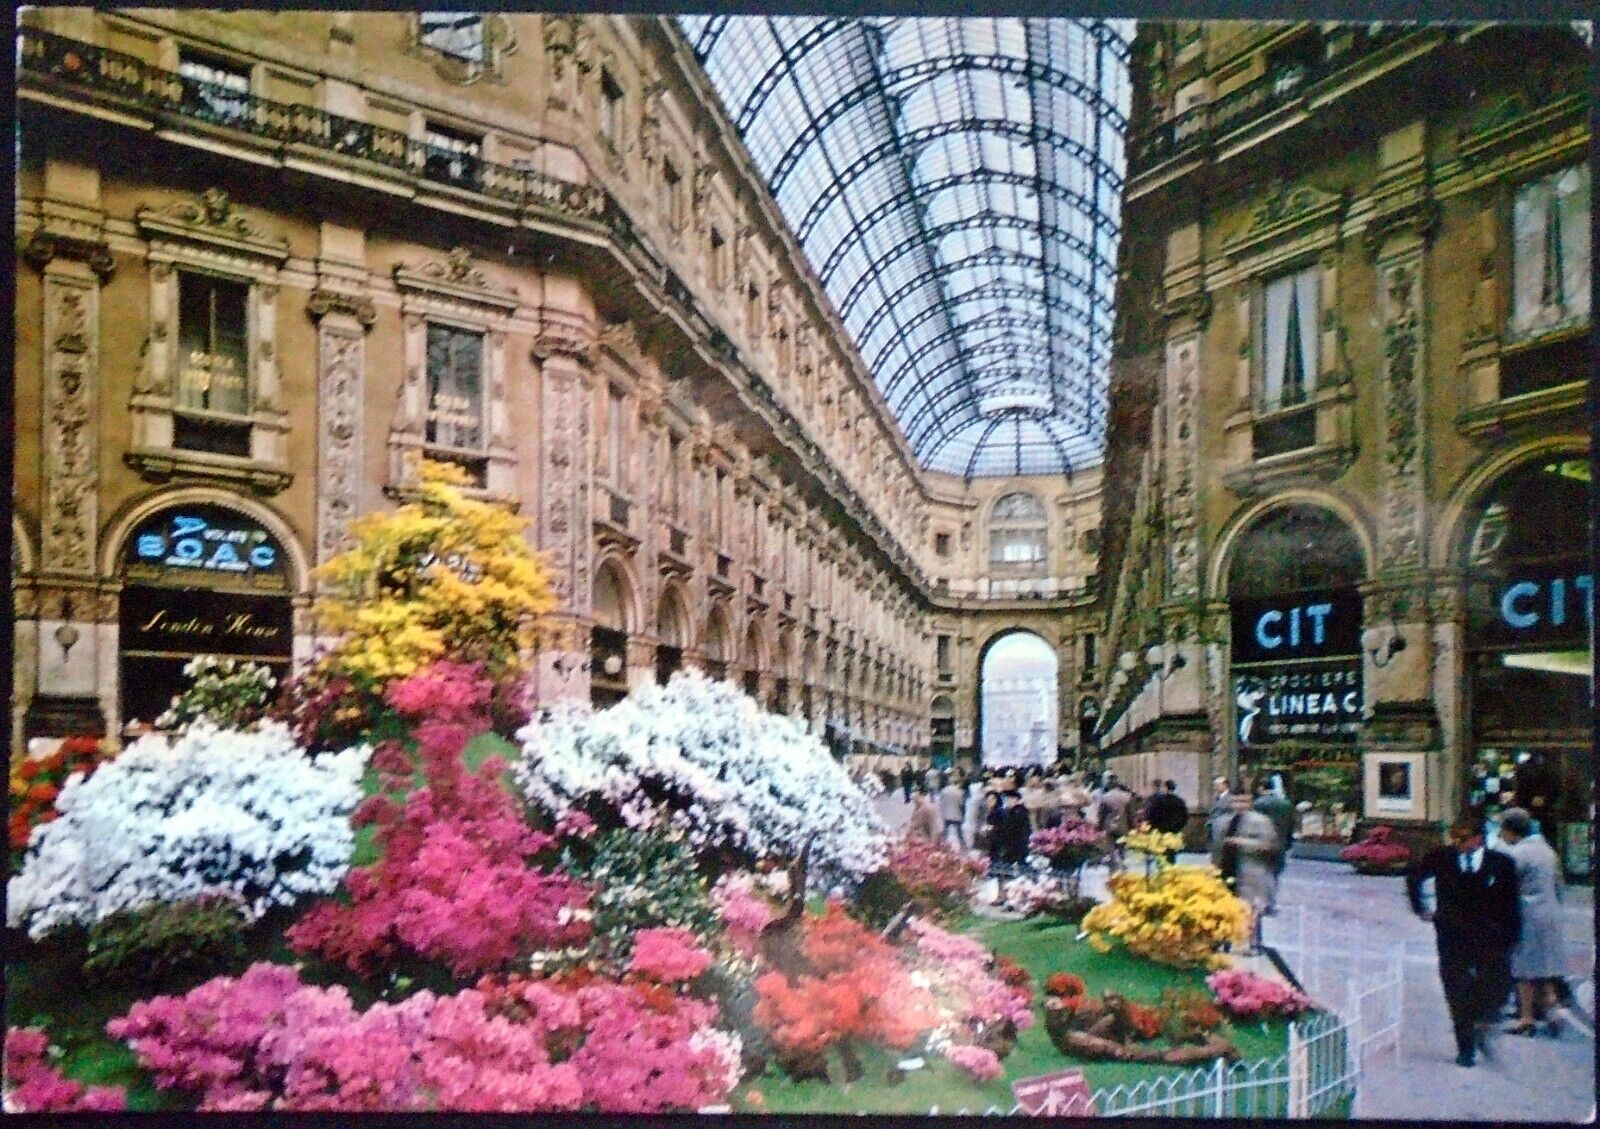 1960s Galleria Vittorio Emanuele II Shopping Mall Piazza del Duomo, Milan, Italy